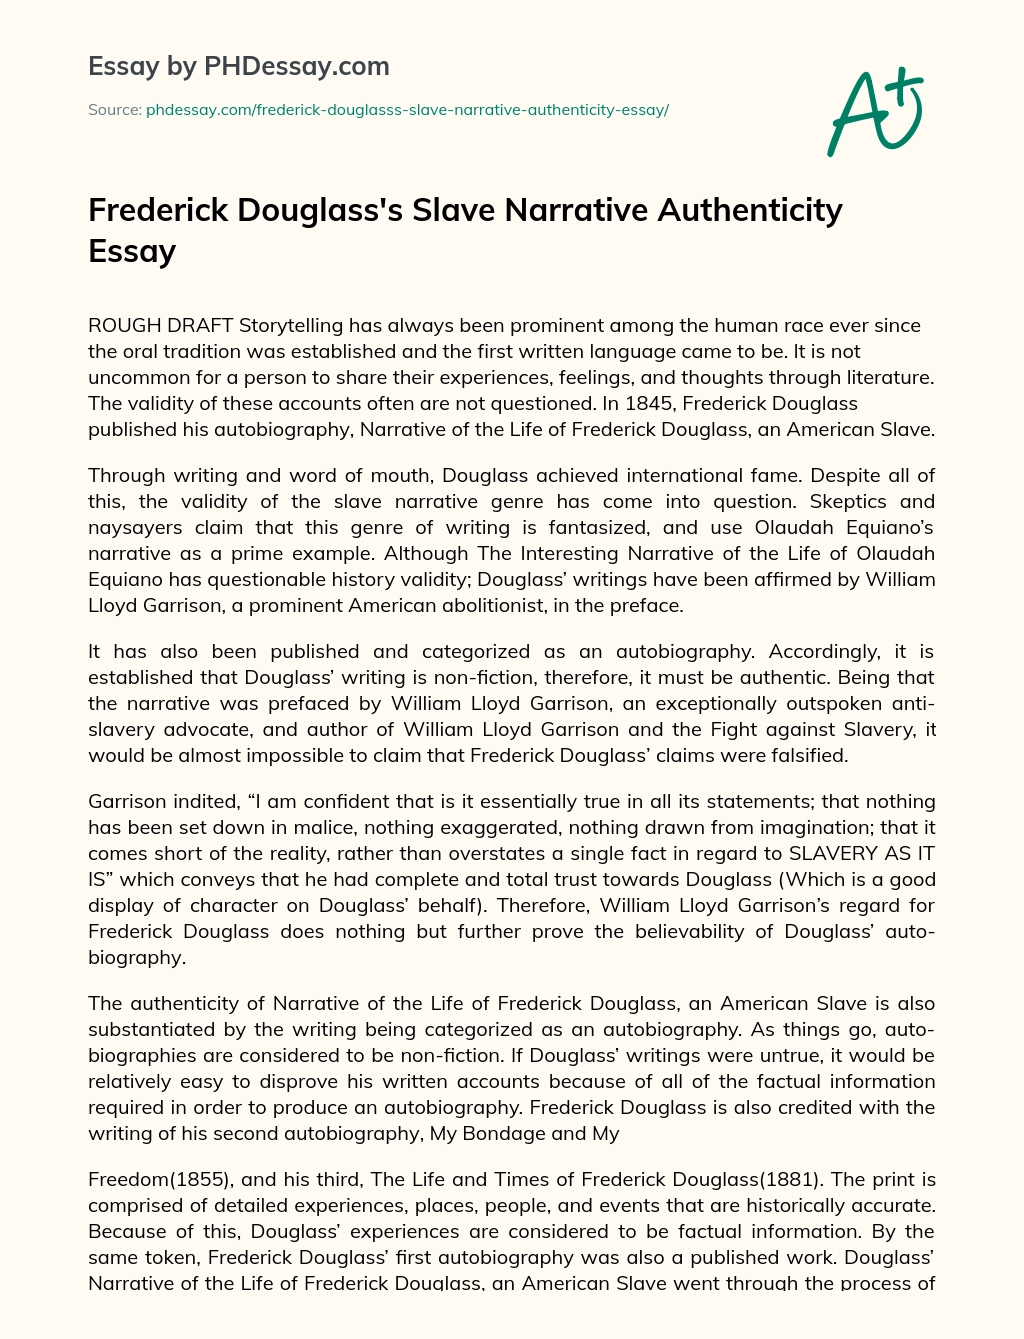 Frederick Douglass’s Slave Narrative Authenticity Essay essay